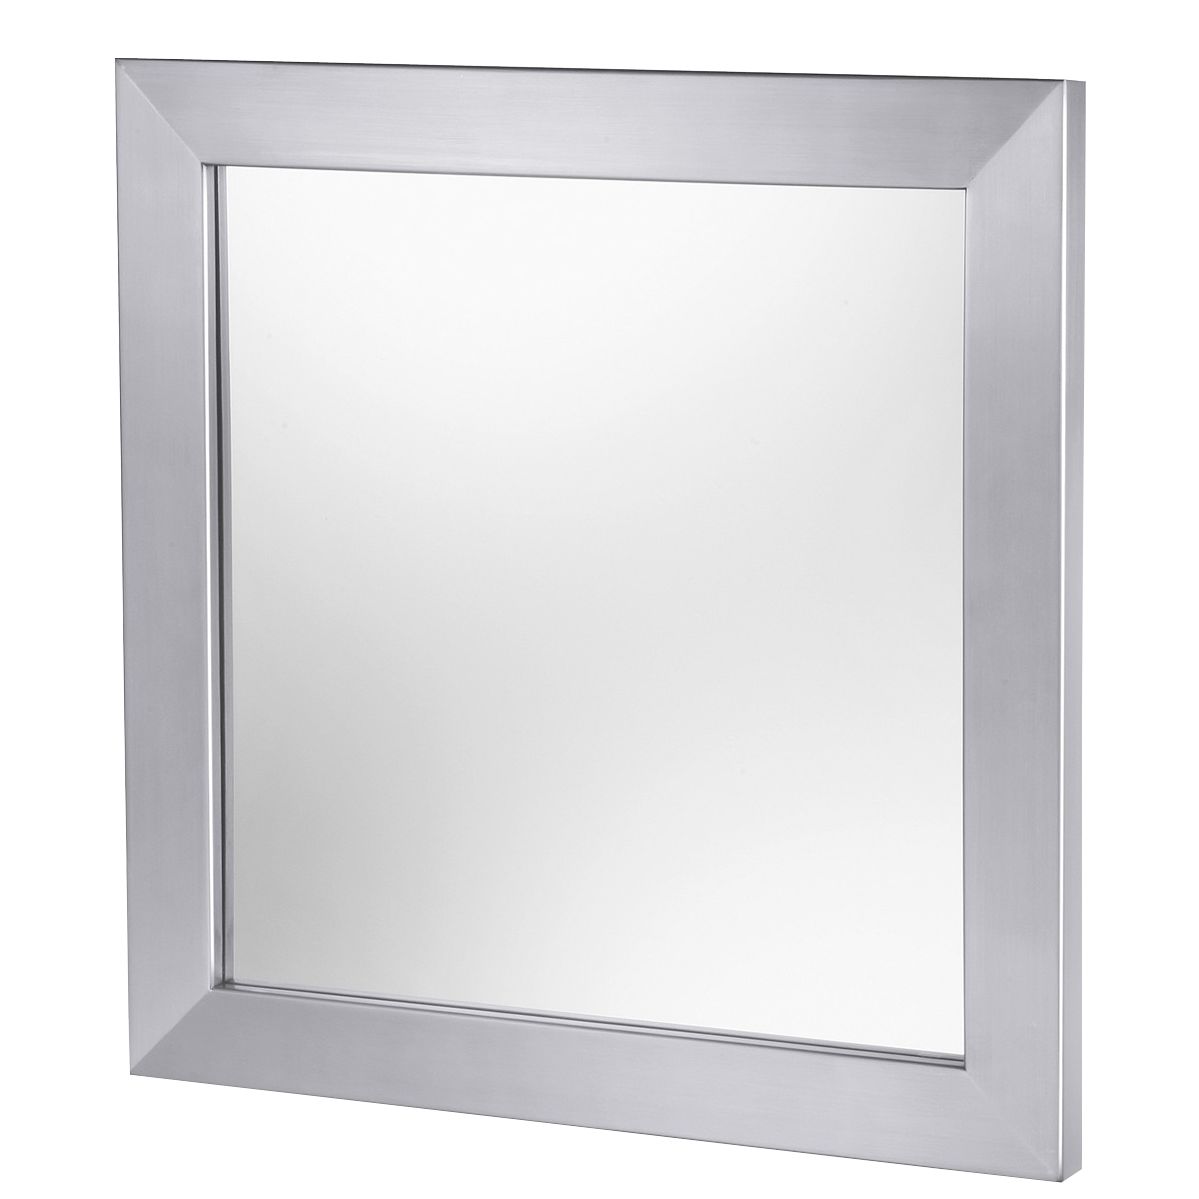 John Lewis Zack Zenta Mirror, Stainless Steel, H40 x W40cm